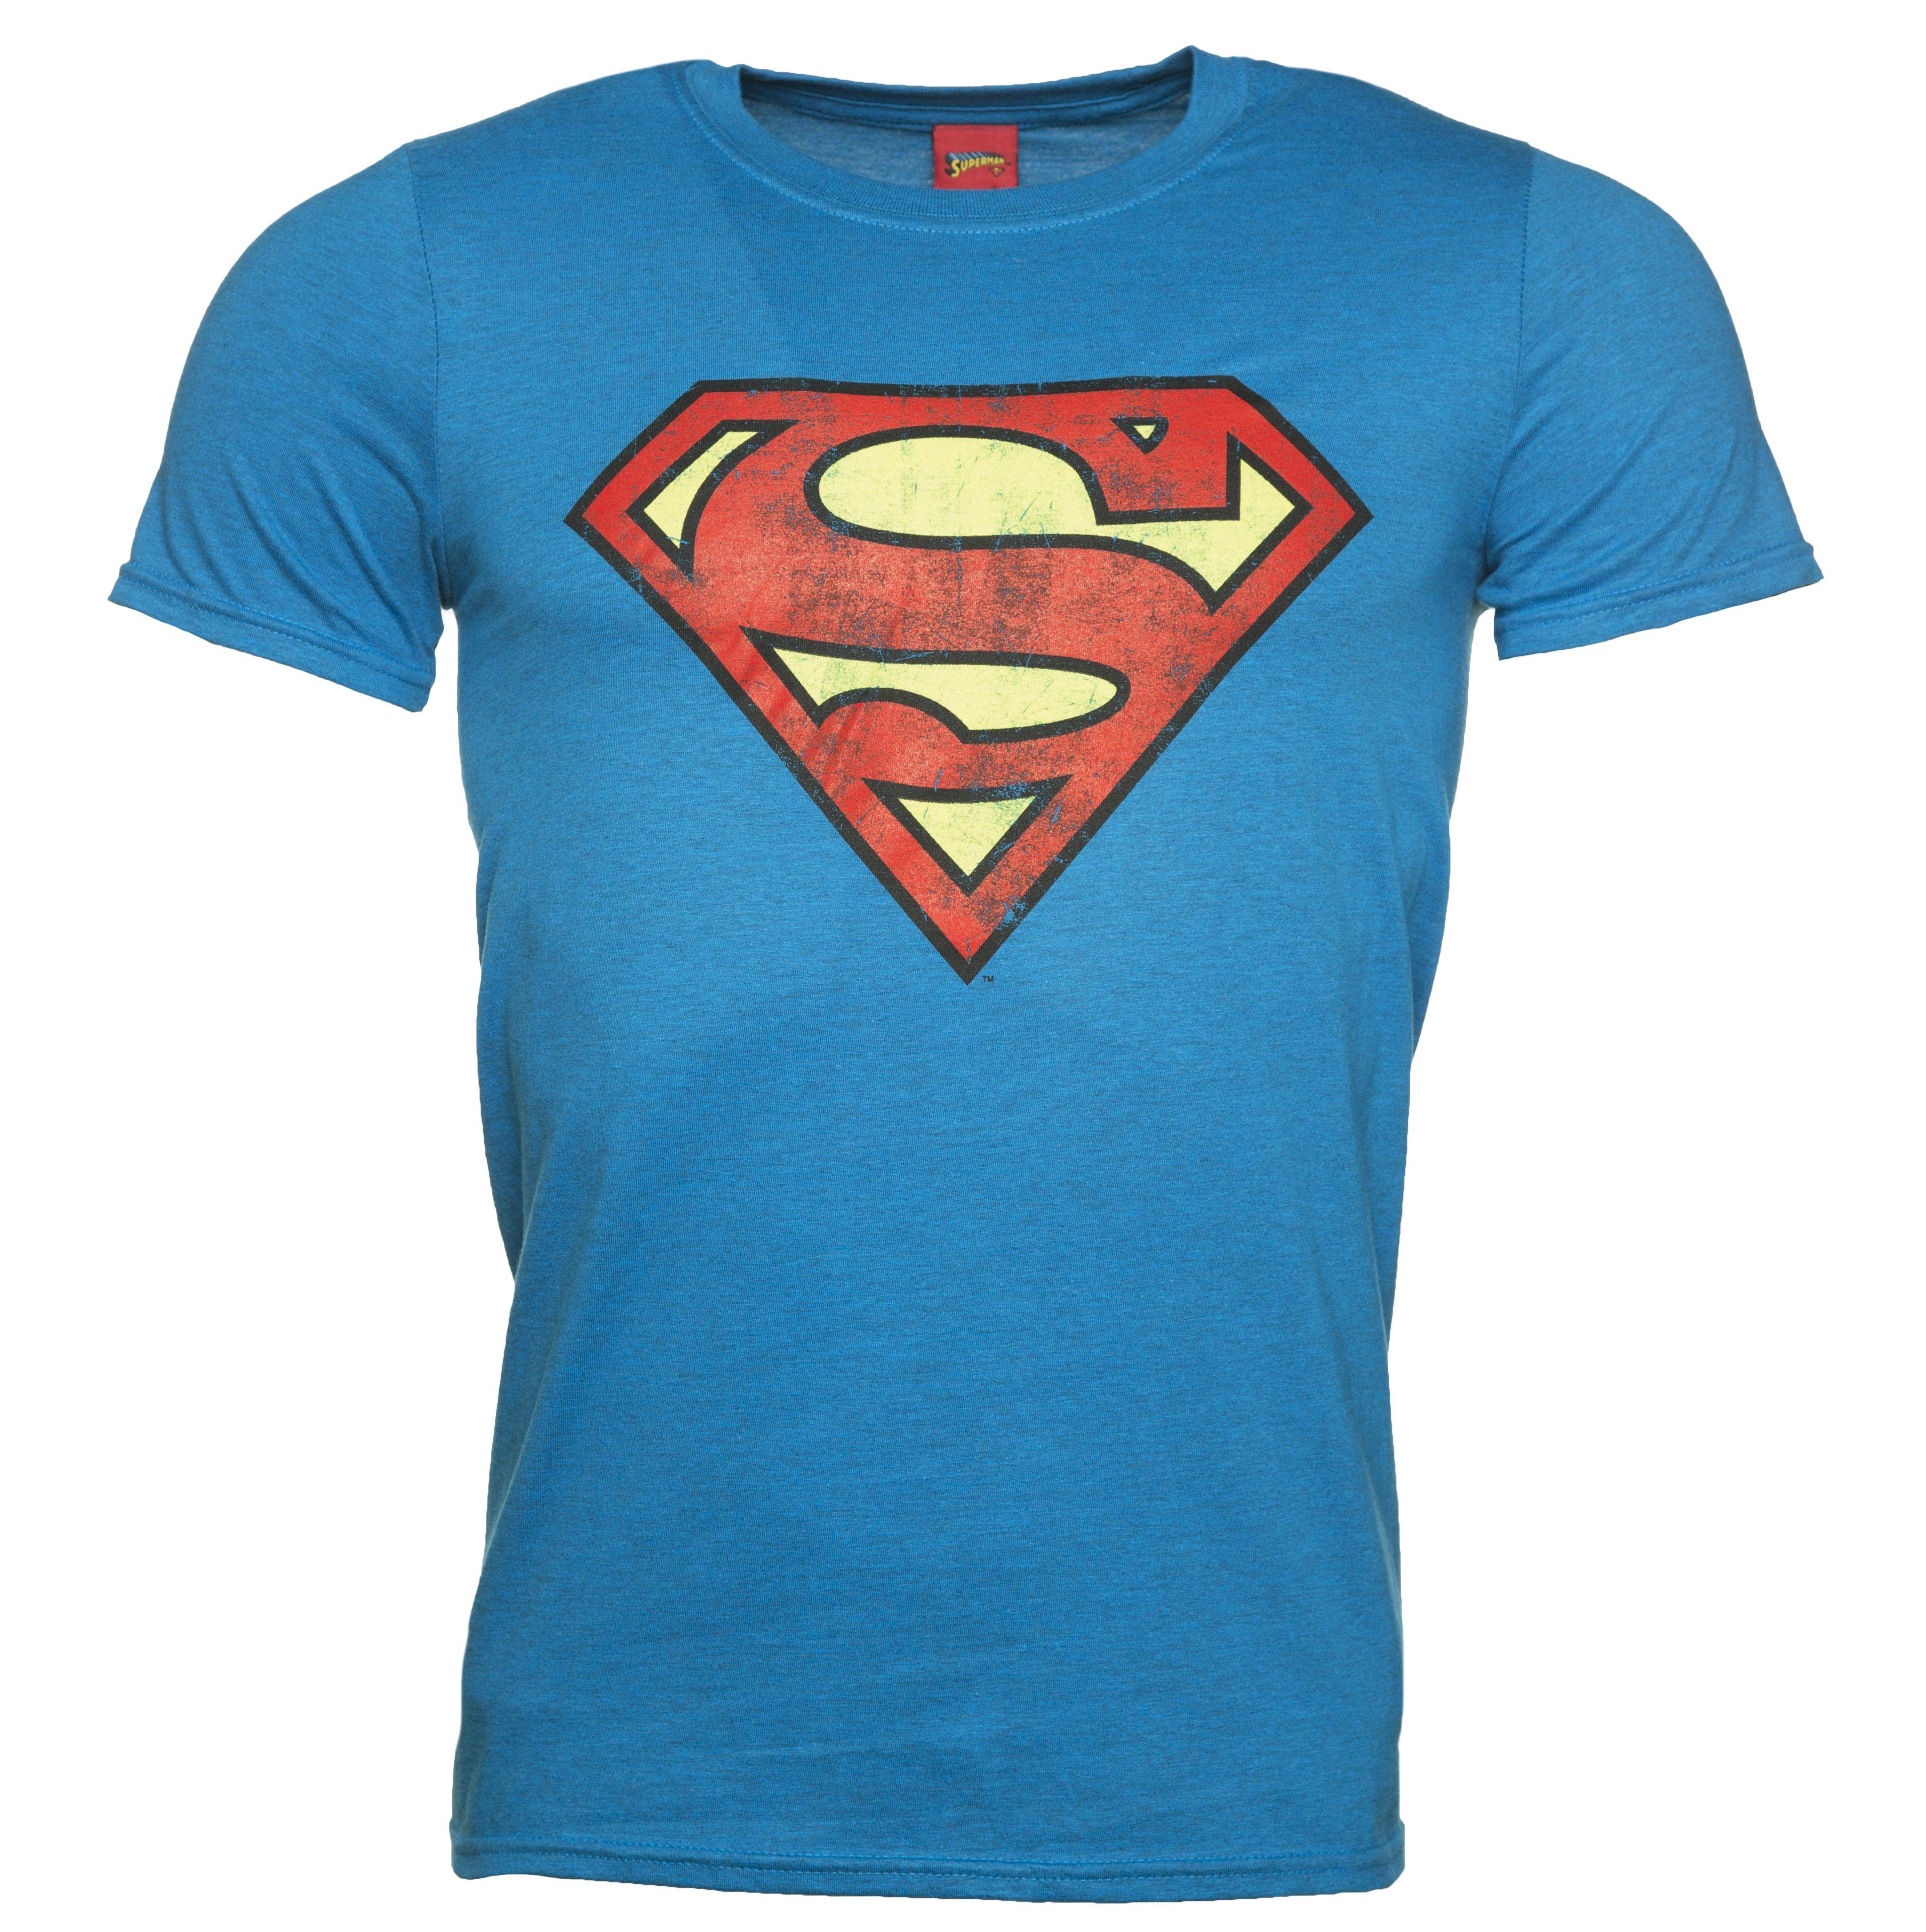 Distressed Superman Logo - Men's Bright Blue Distressed Superman Logo T-Shirt